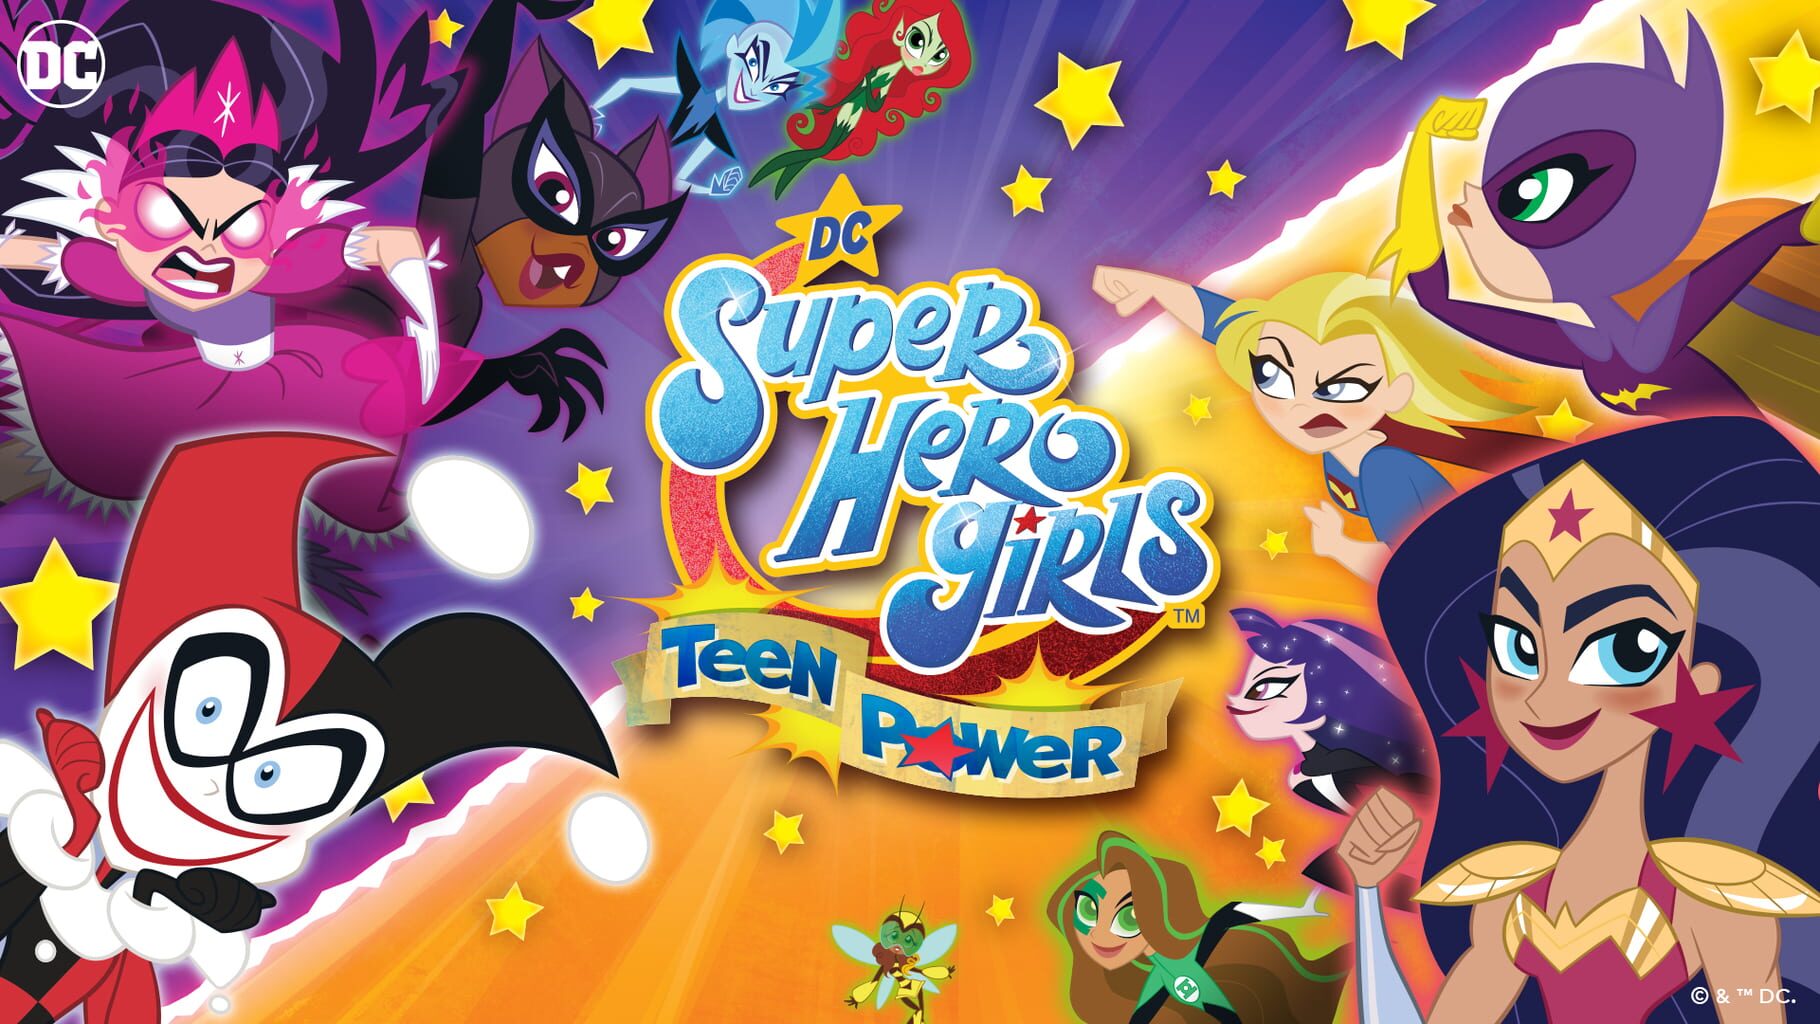 DC Super Hero Girls: Teen Power artwork